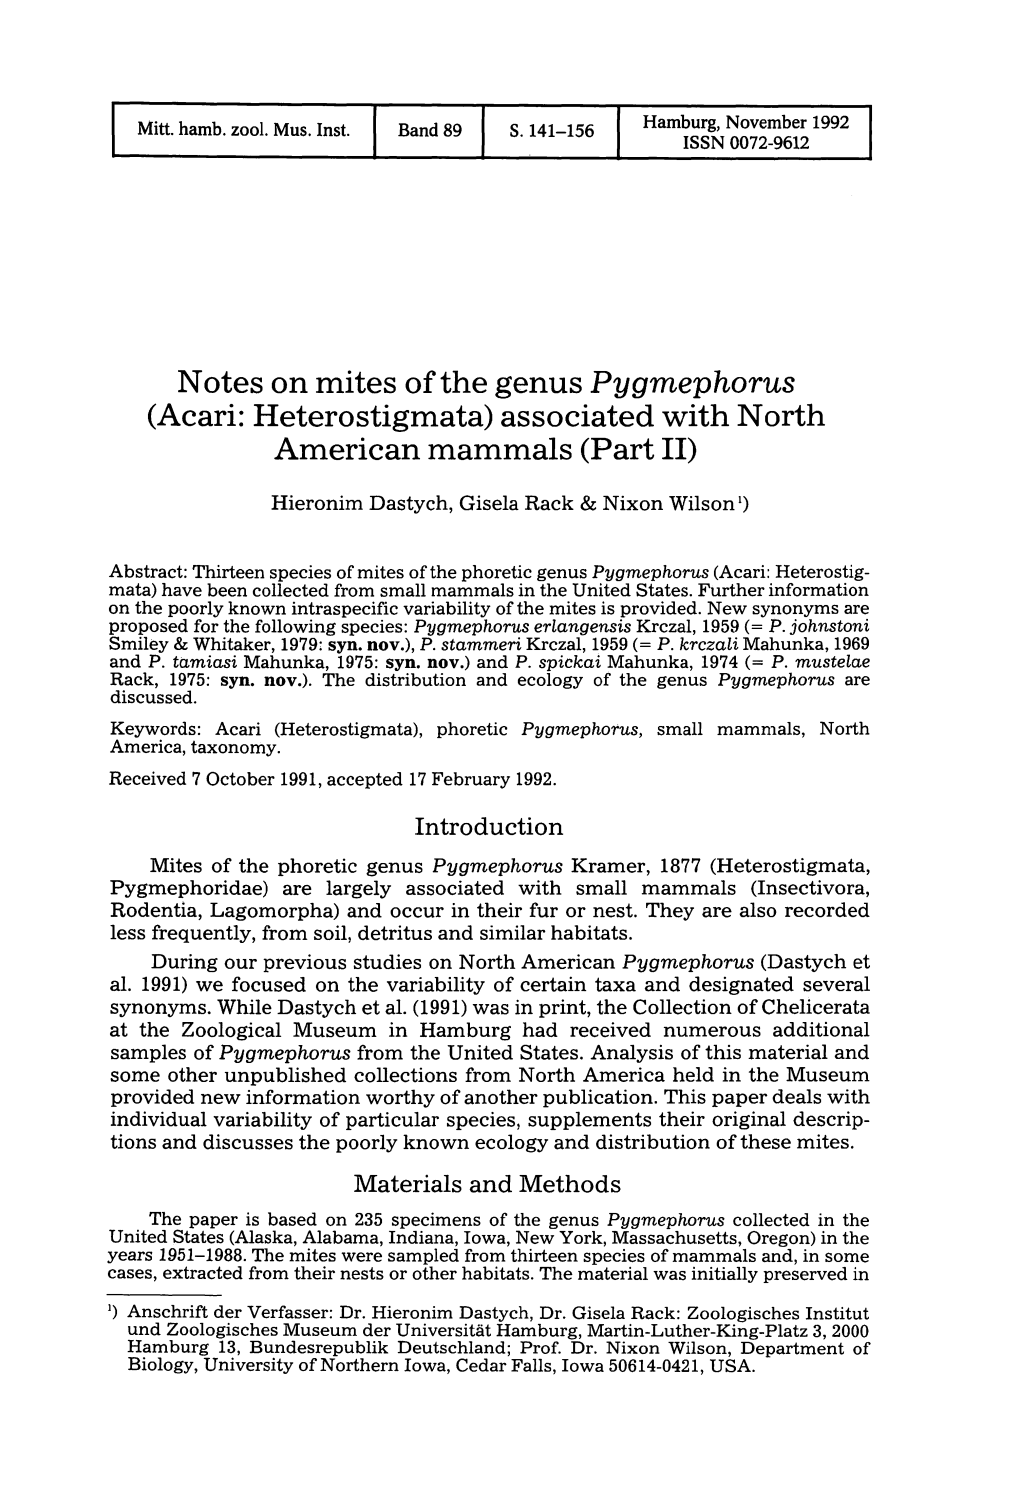 Notes on Mites Ofthe Genus Pygmephorus (Acari: Heterostigmata) Associated \Vith North American Mammals (Part 11)